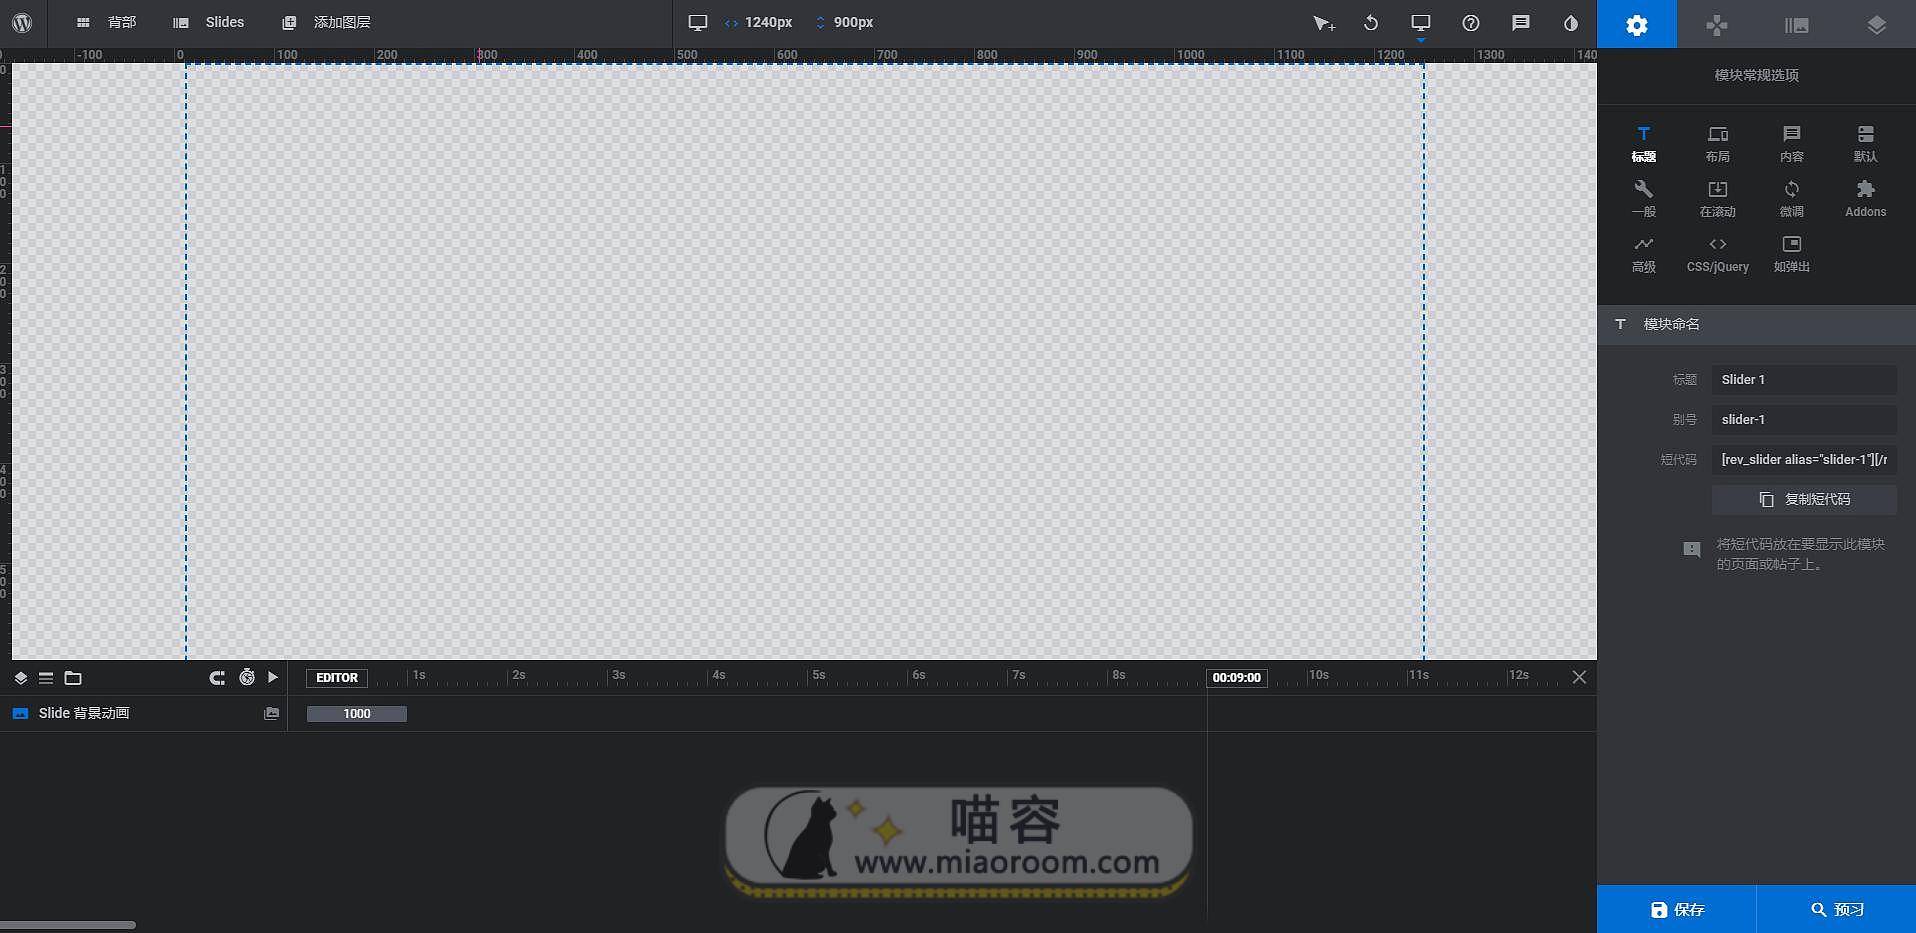 「WP插件」视差轮播图 Slider Revolution v6.1.0 高级破解专业版 已更新 【中文汉化】